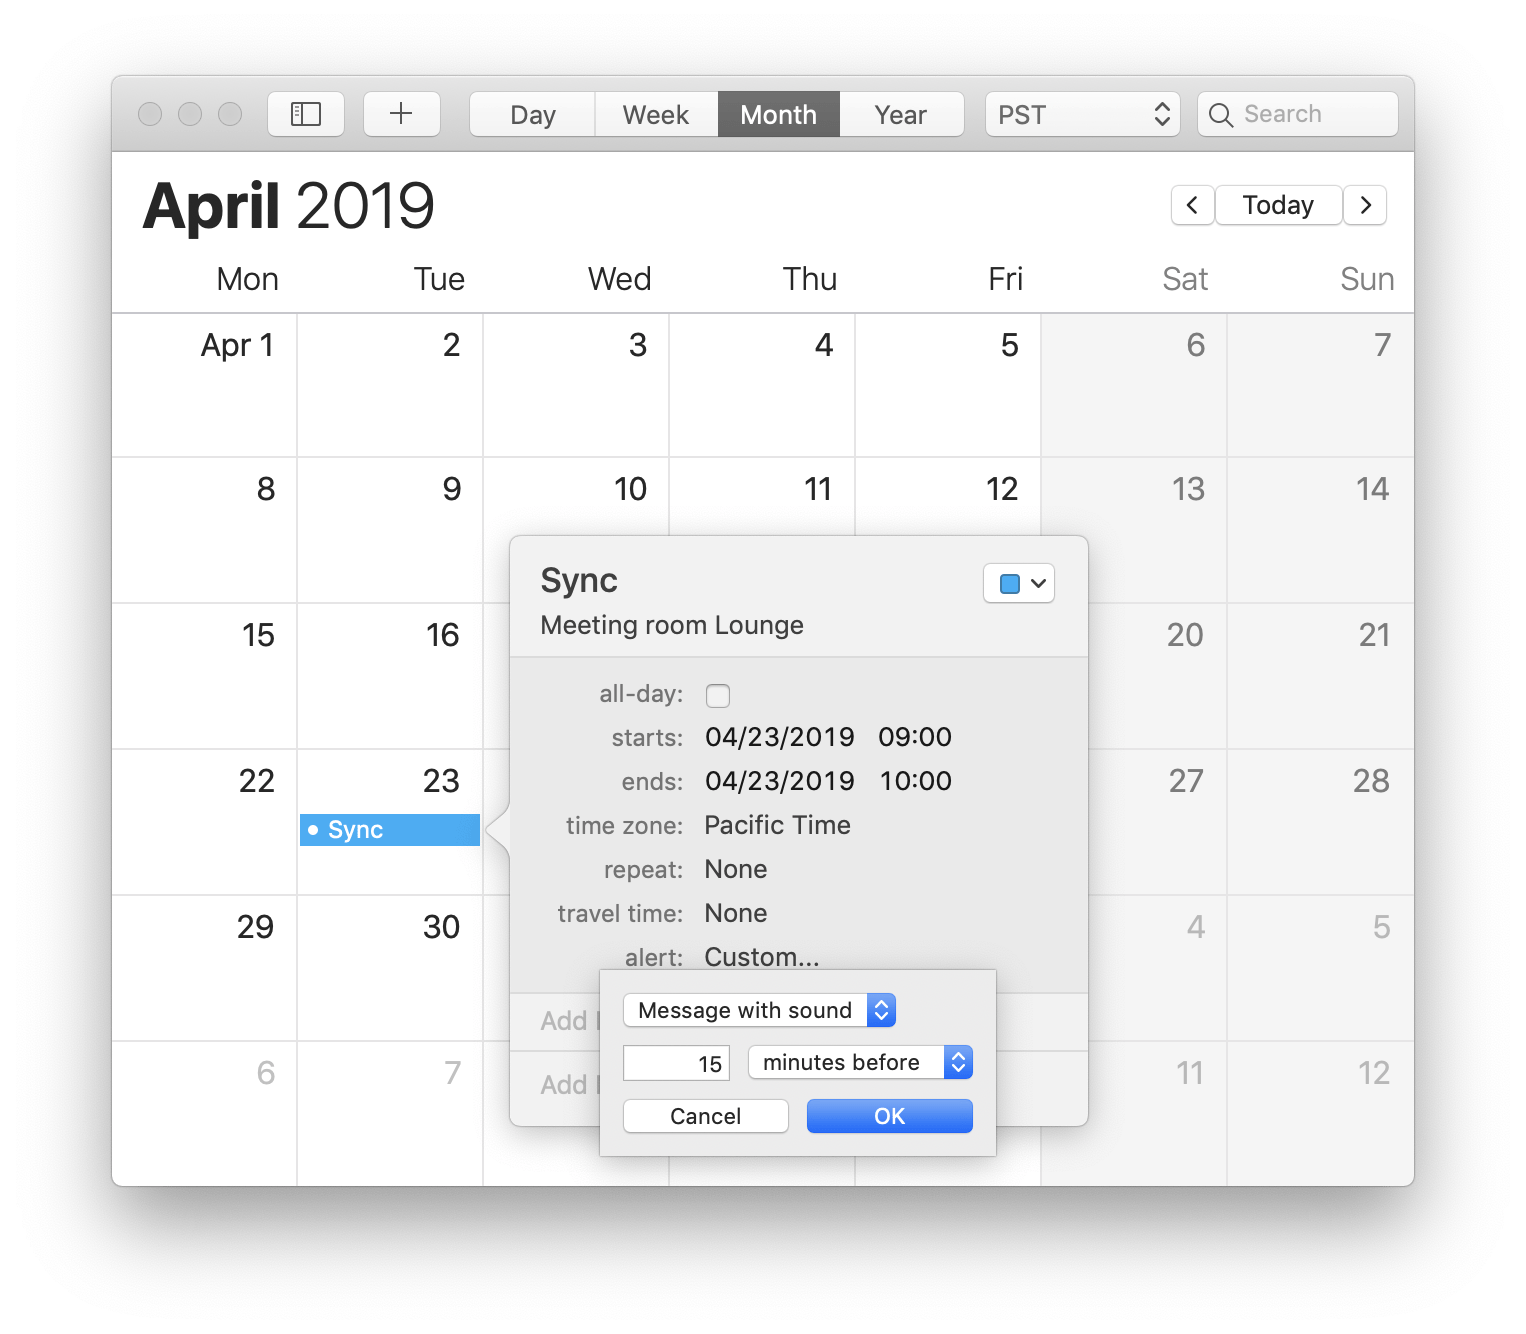 Set up alarms in Calendar app